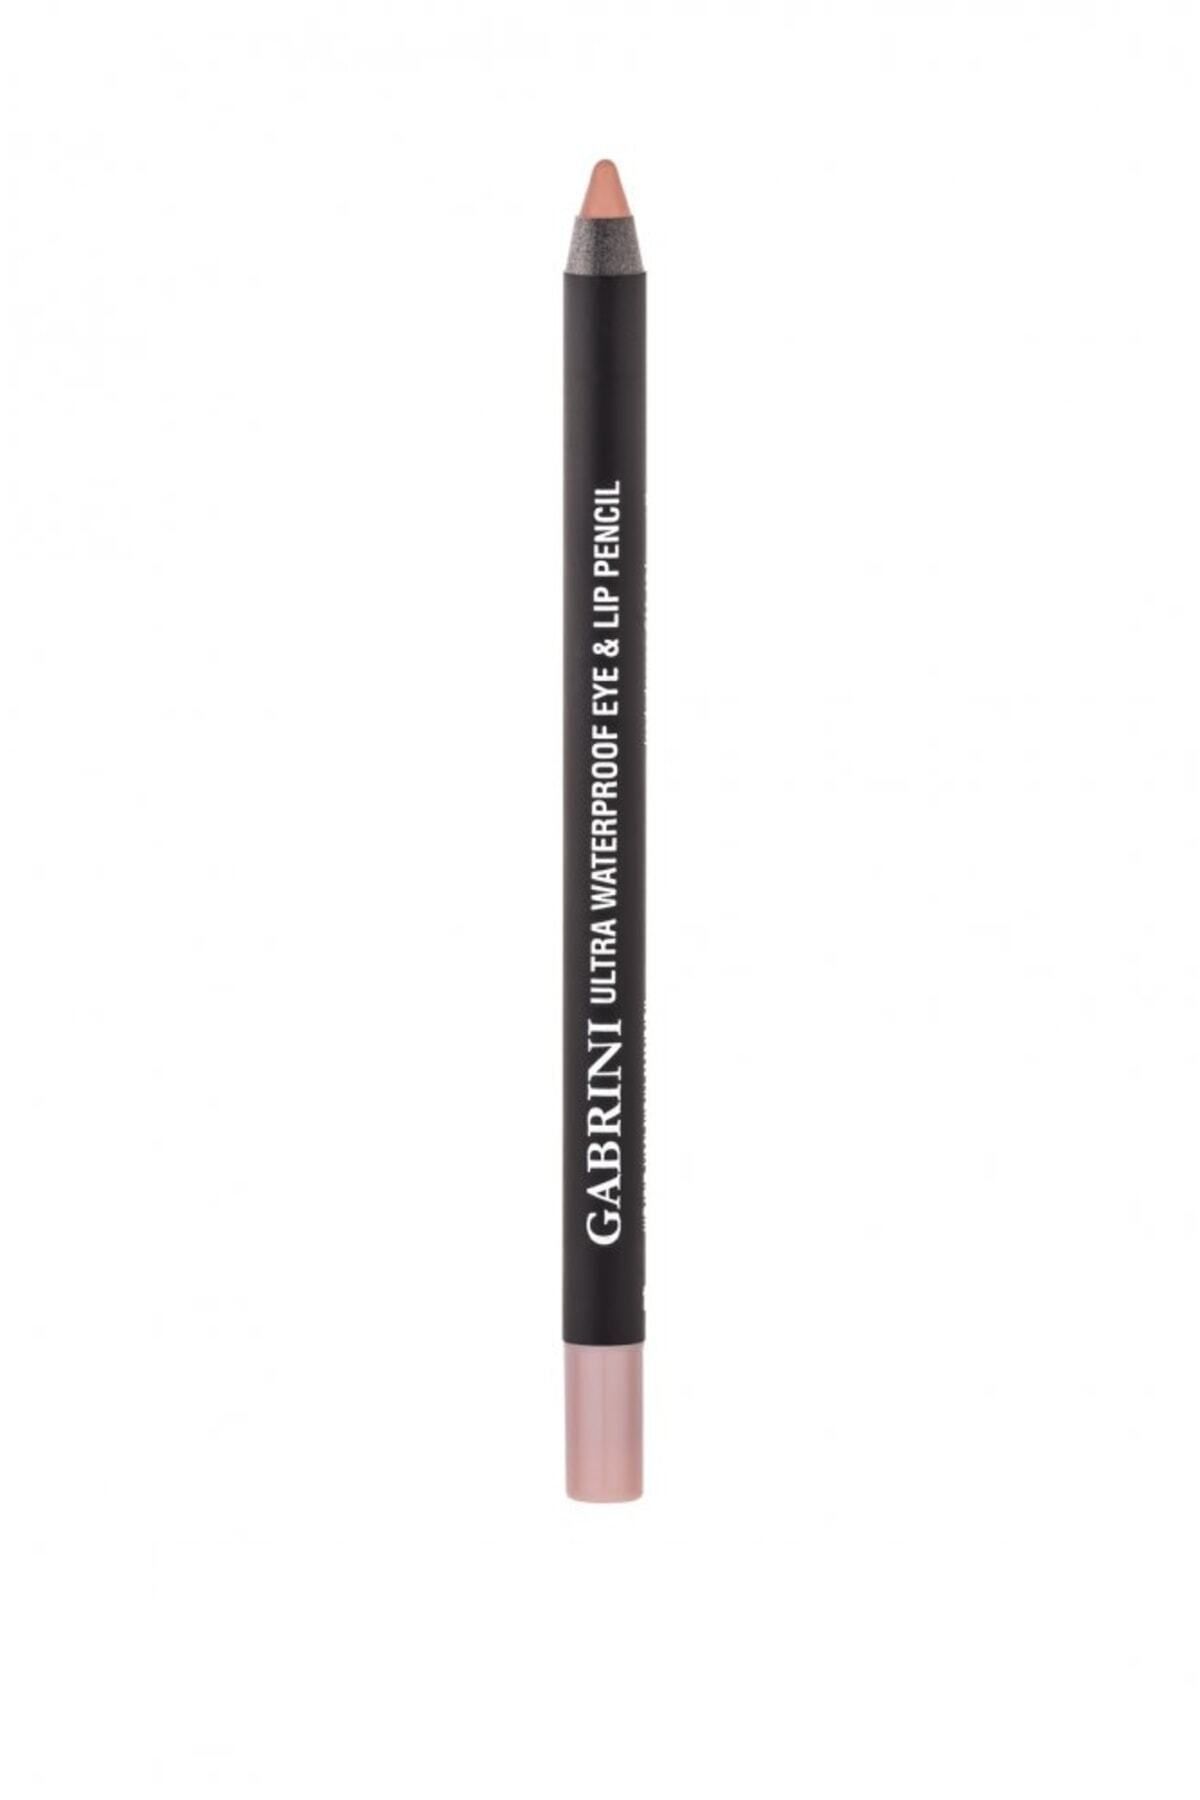 Gabrini Ultra Waterproof Eye & Lip Pencil 25